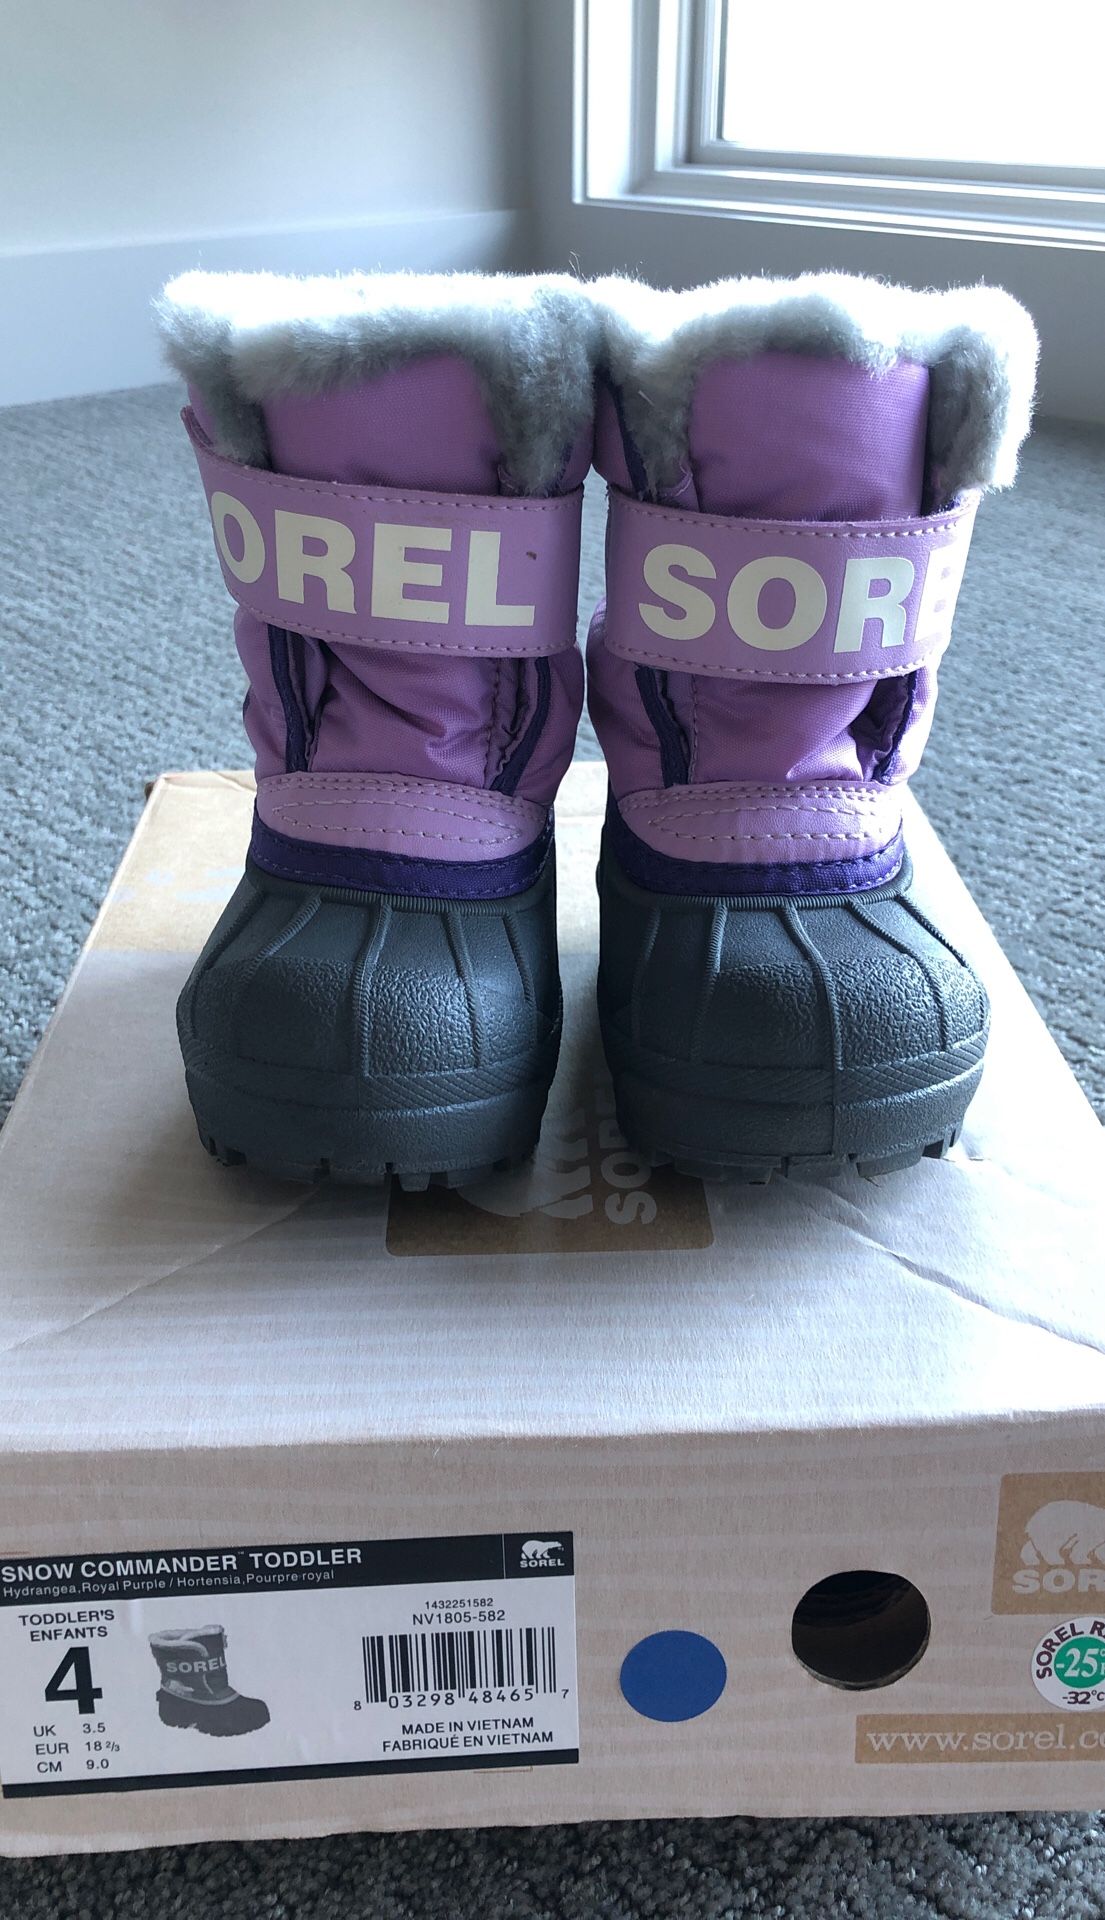 Sorel toddler snow commander boots size 4 Purple